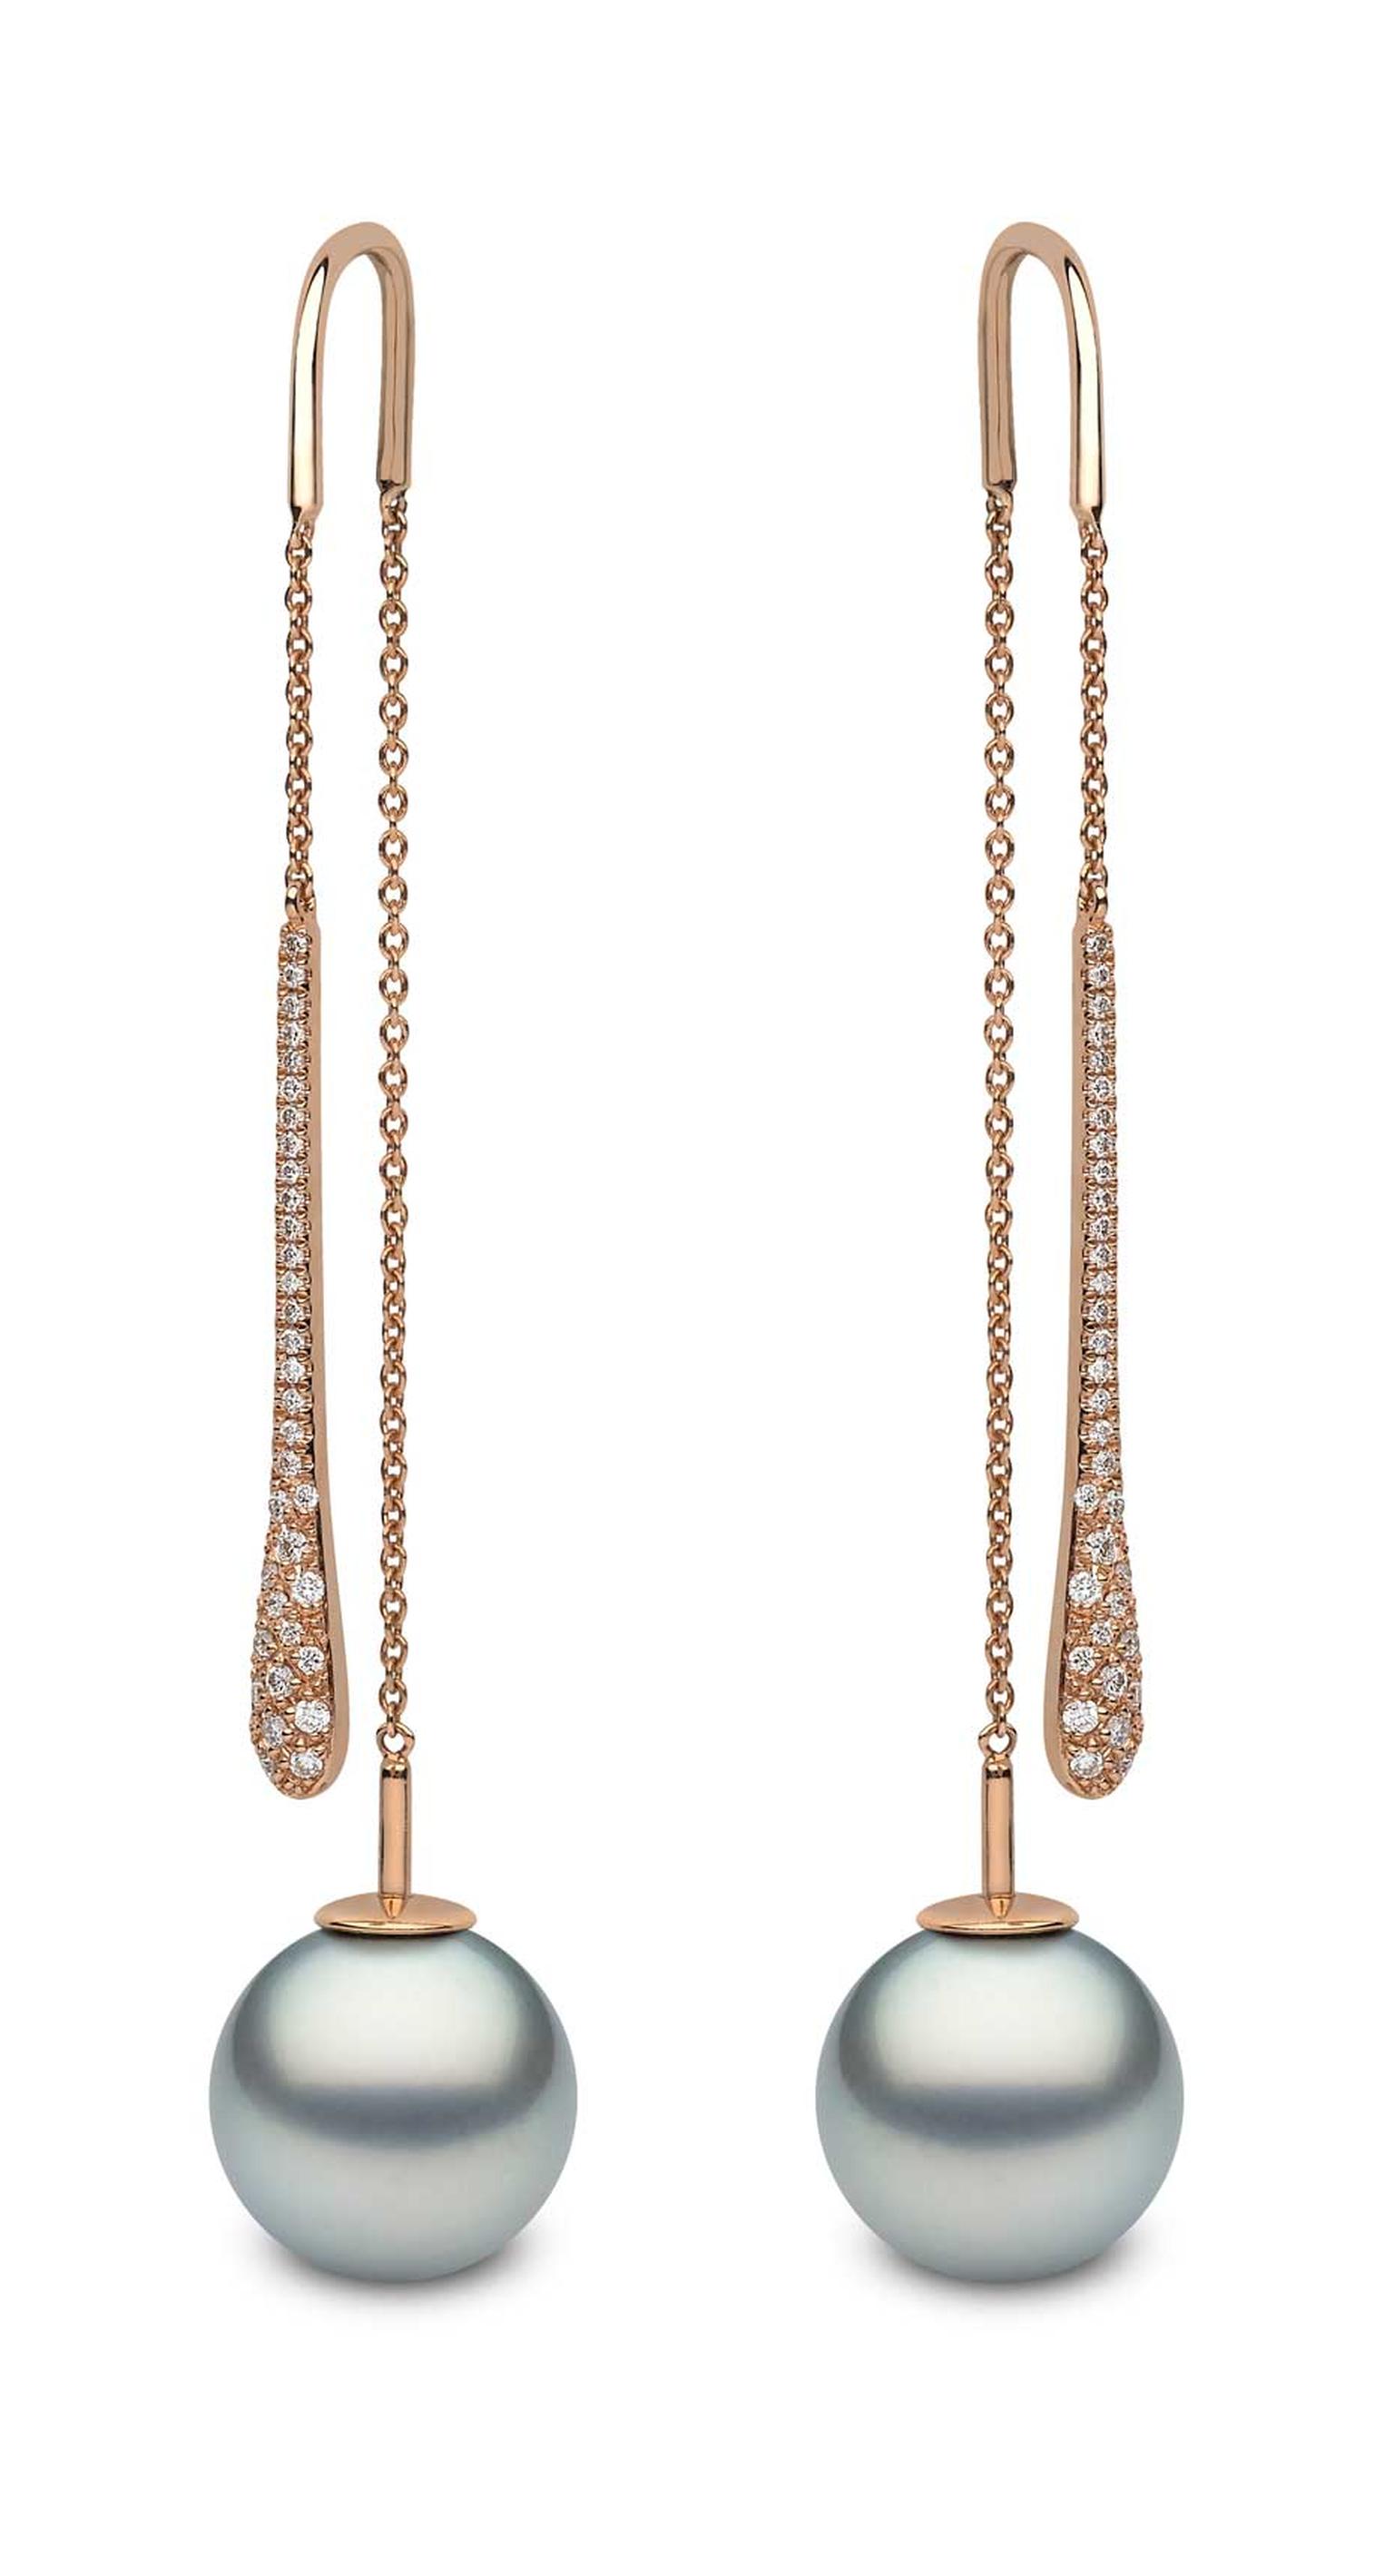 Rose gold earrings featuring diamonds and 12mm-13mm Tahitian pearls from YOKO London.